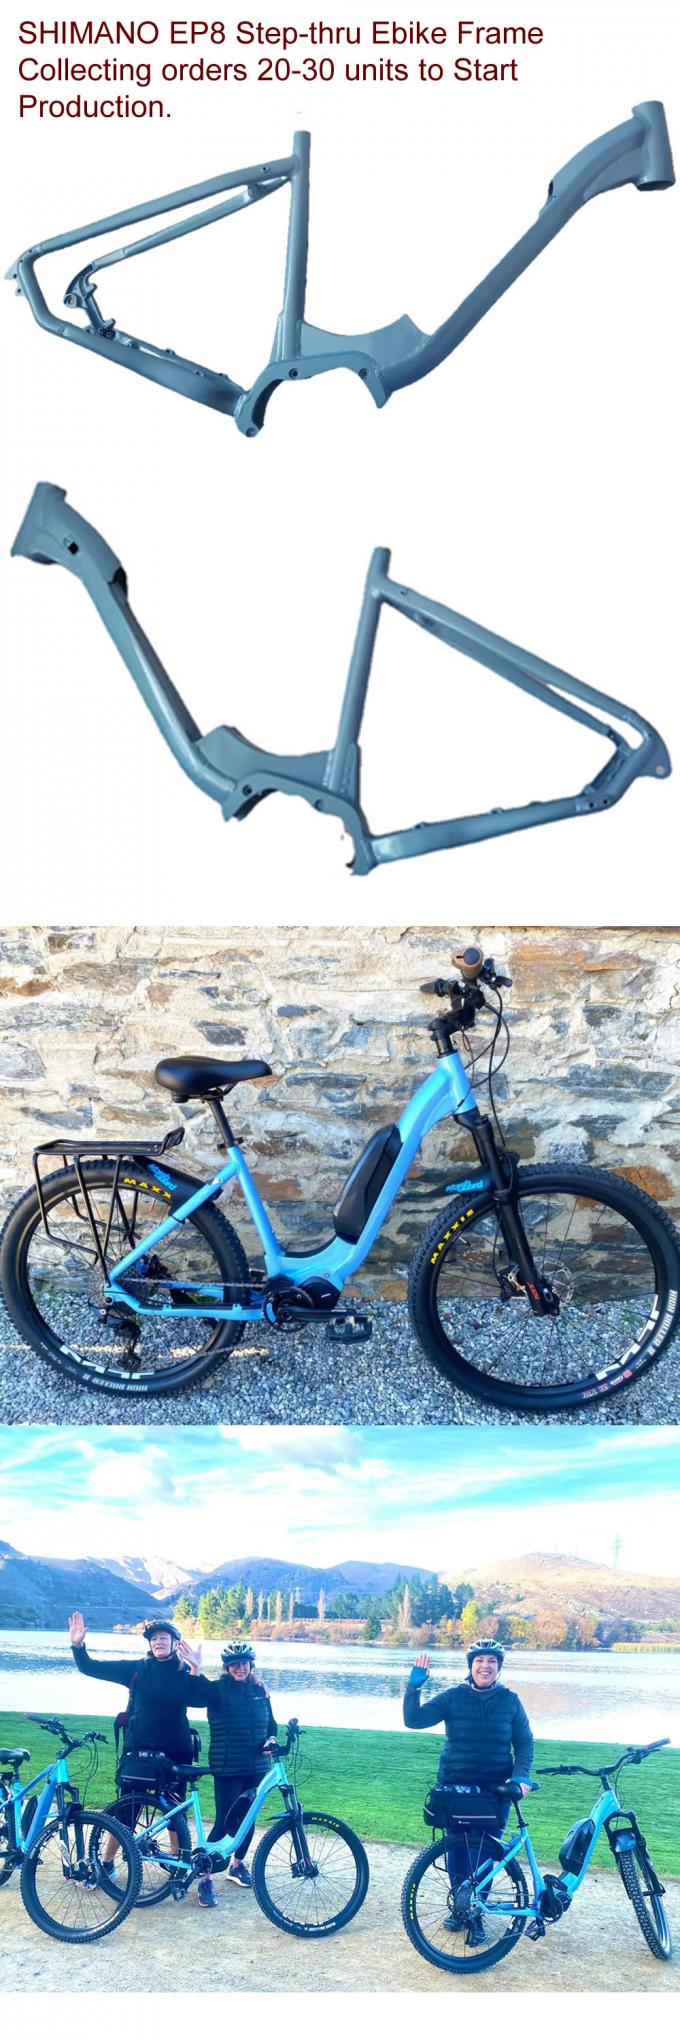 Shimano EP8 средний привод электрический велосипед рама для E8000 Шаг через город E-велосипед ремень / цепь привода 5